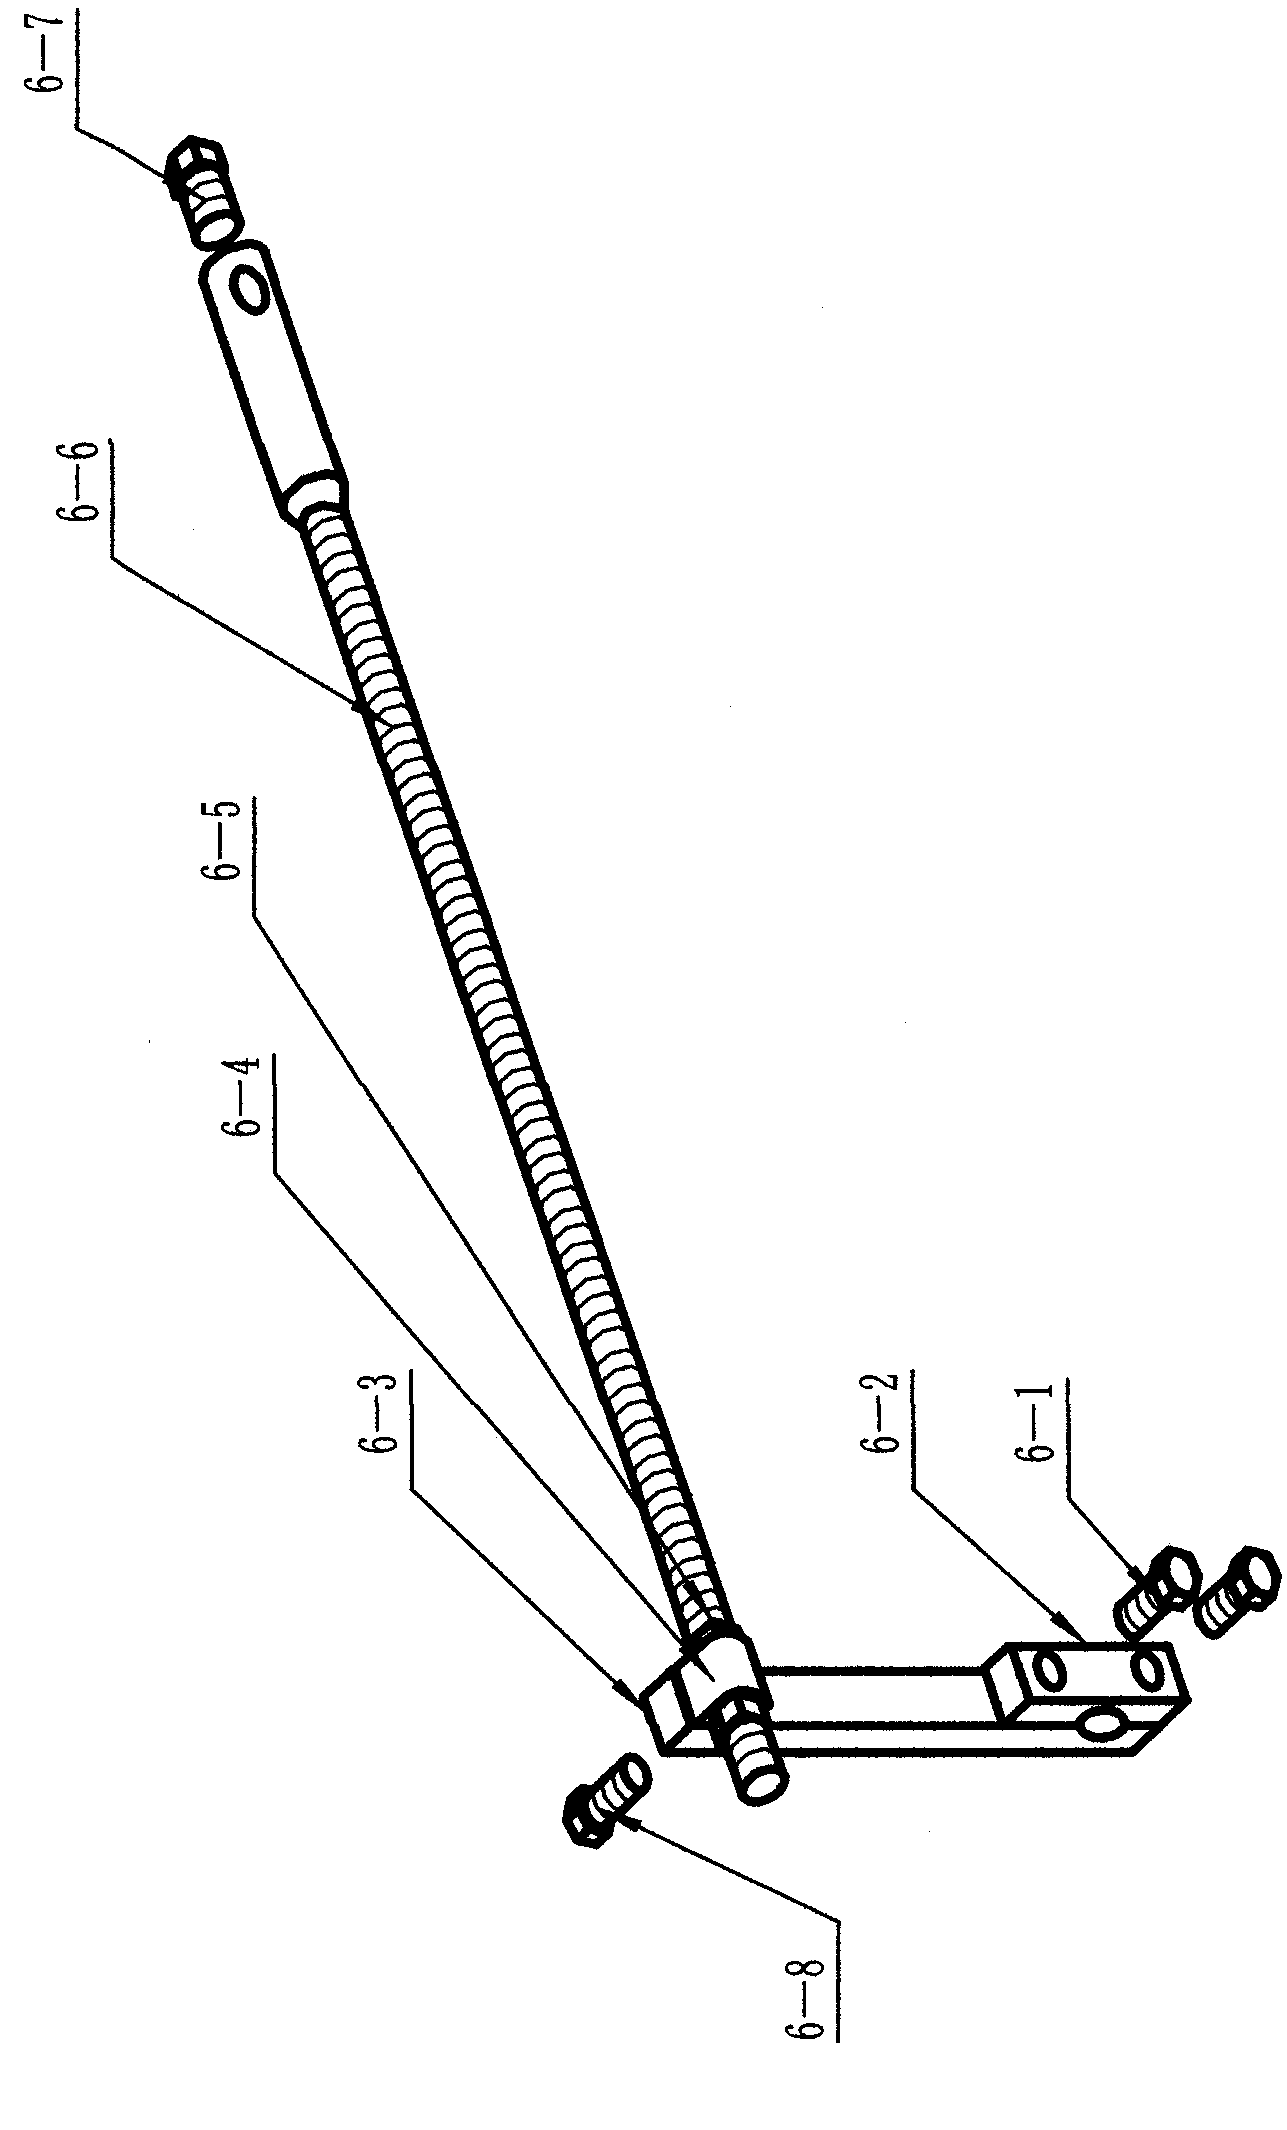 Single-side double-rail combined skeletal external fixation device